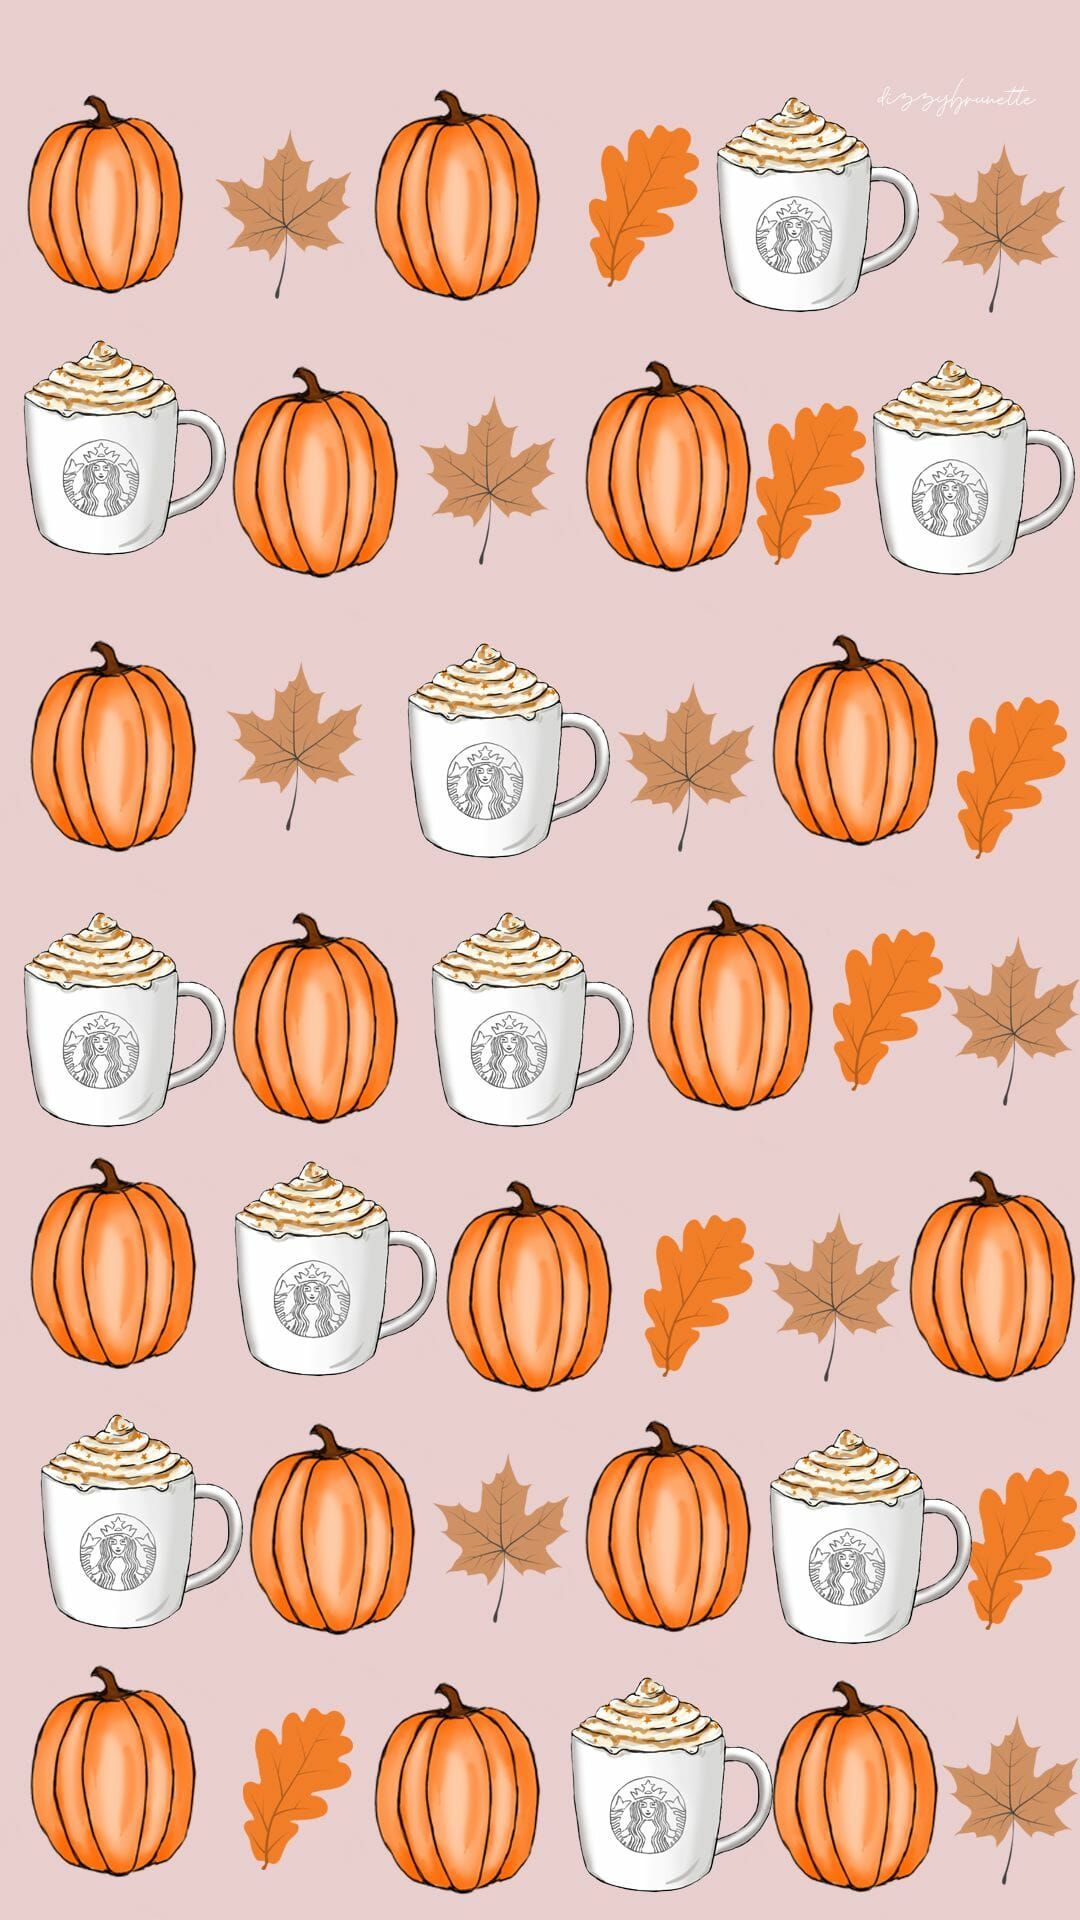 Cute Aesthetic Autumn Wallpaper